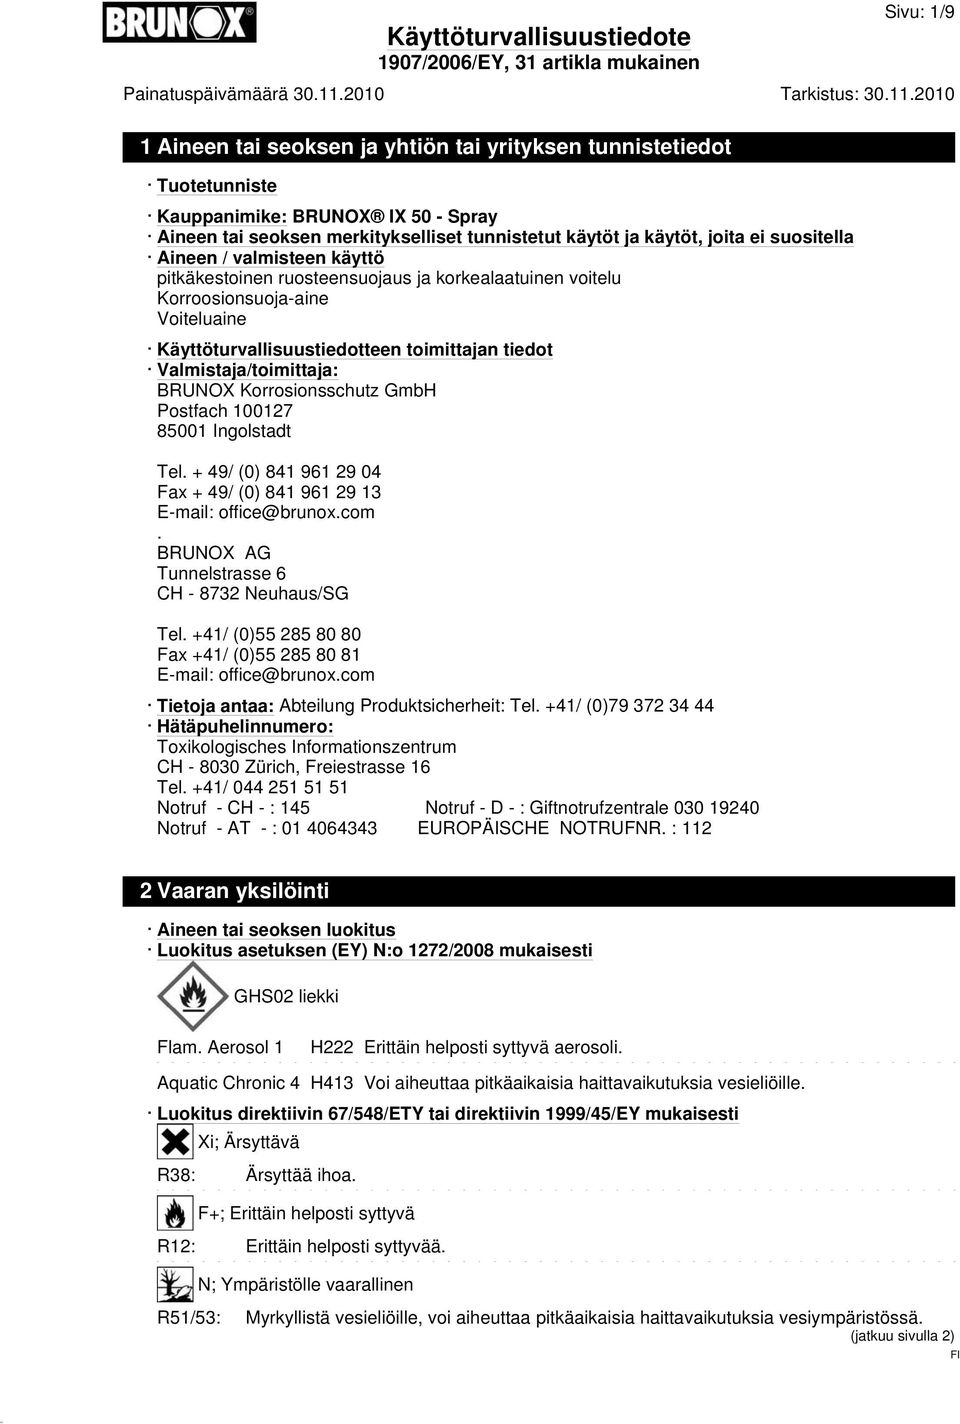 BRUNOX Korrosionsschutz GmbH Postfach 100127 85001 Ingolstadt Tel. + 49/ (0) 841 961 29 04 Fax + 49/ (0) 841 961 29 13 E-mail: office@brunox.com. BRUNOX AG Tunnelstrasse 6 CH - 8732 Neuhaus/SG Tel.